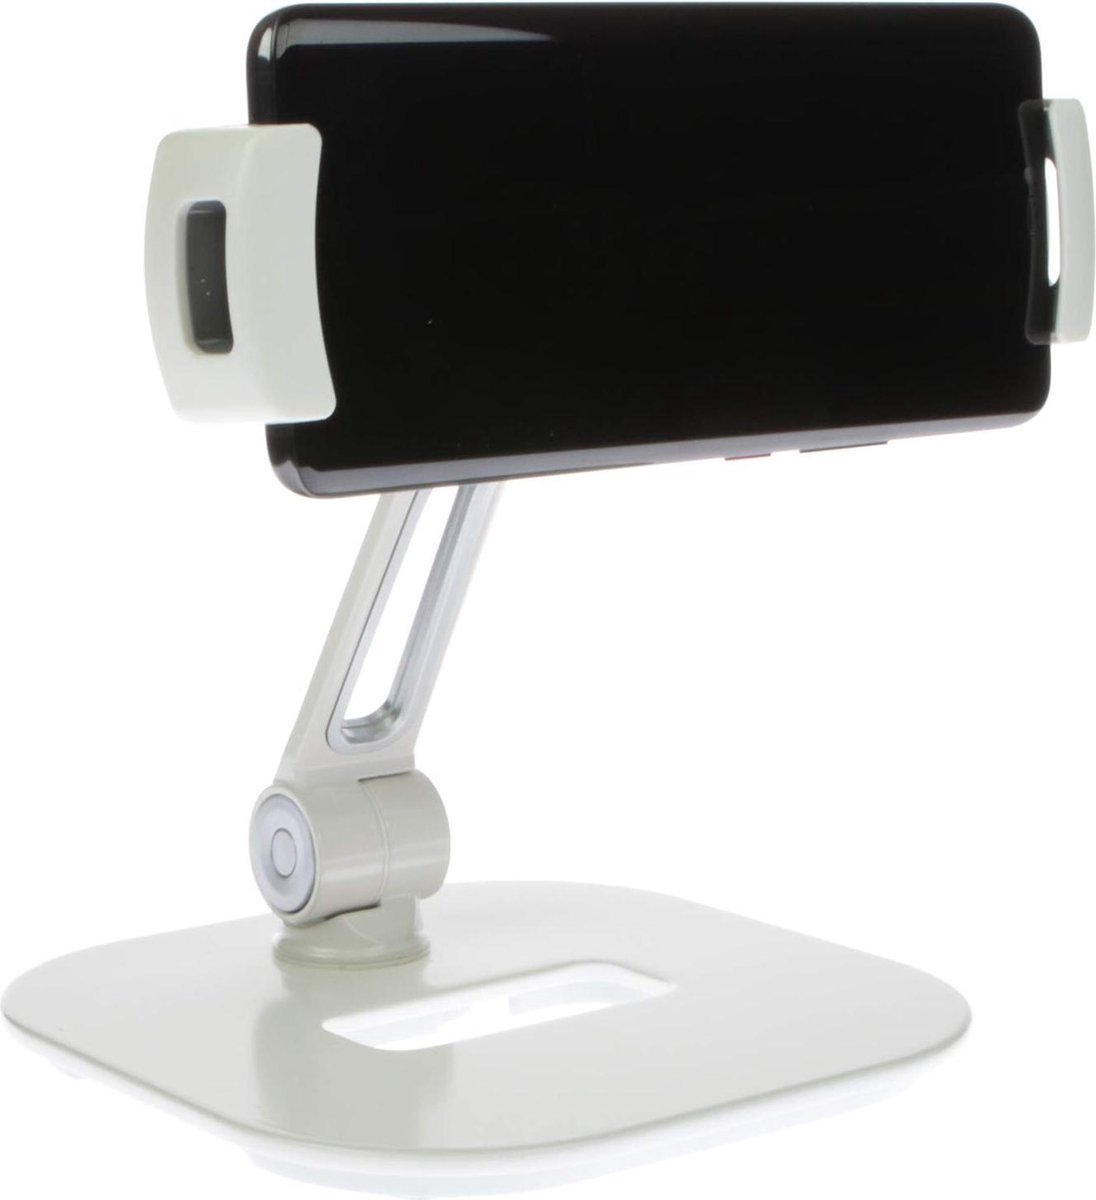 Unversele houder 360 ° draaibaar |Tafelmodel Voor tablet, mobiele telefoon, smartphone & camera | Stabiele aluminium voet | Desktopstaander | wit